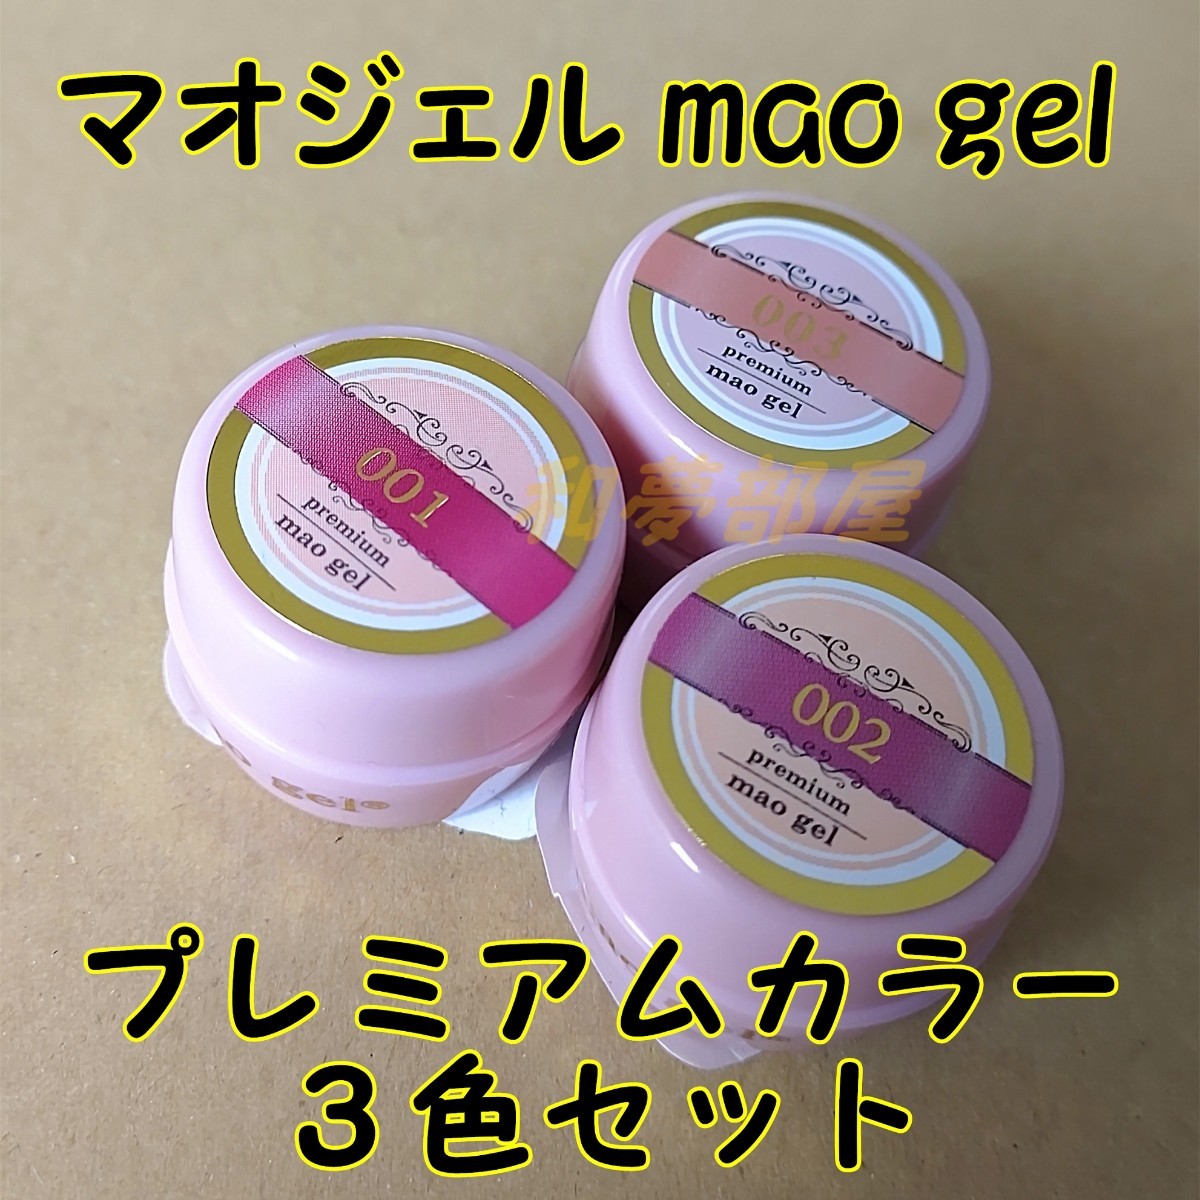 ☆MP3s新品★マオジェルプレミアムラインカラージェル３色セット☆